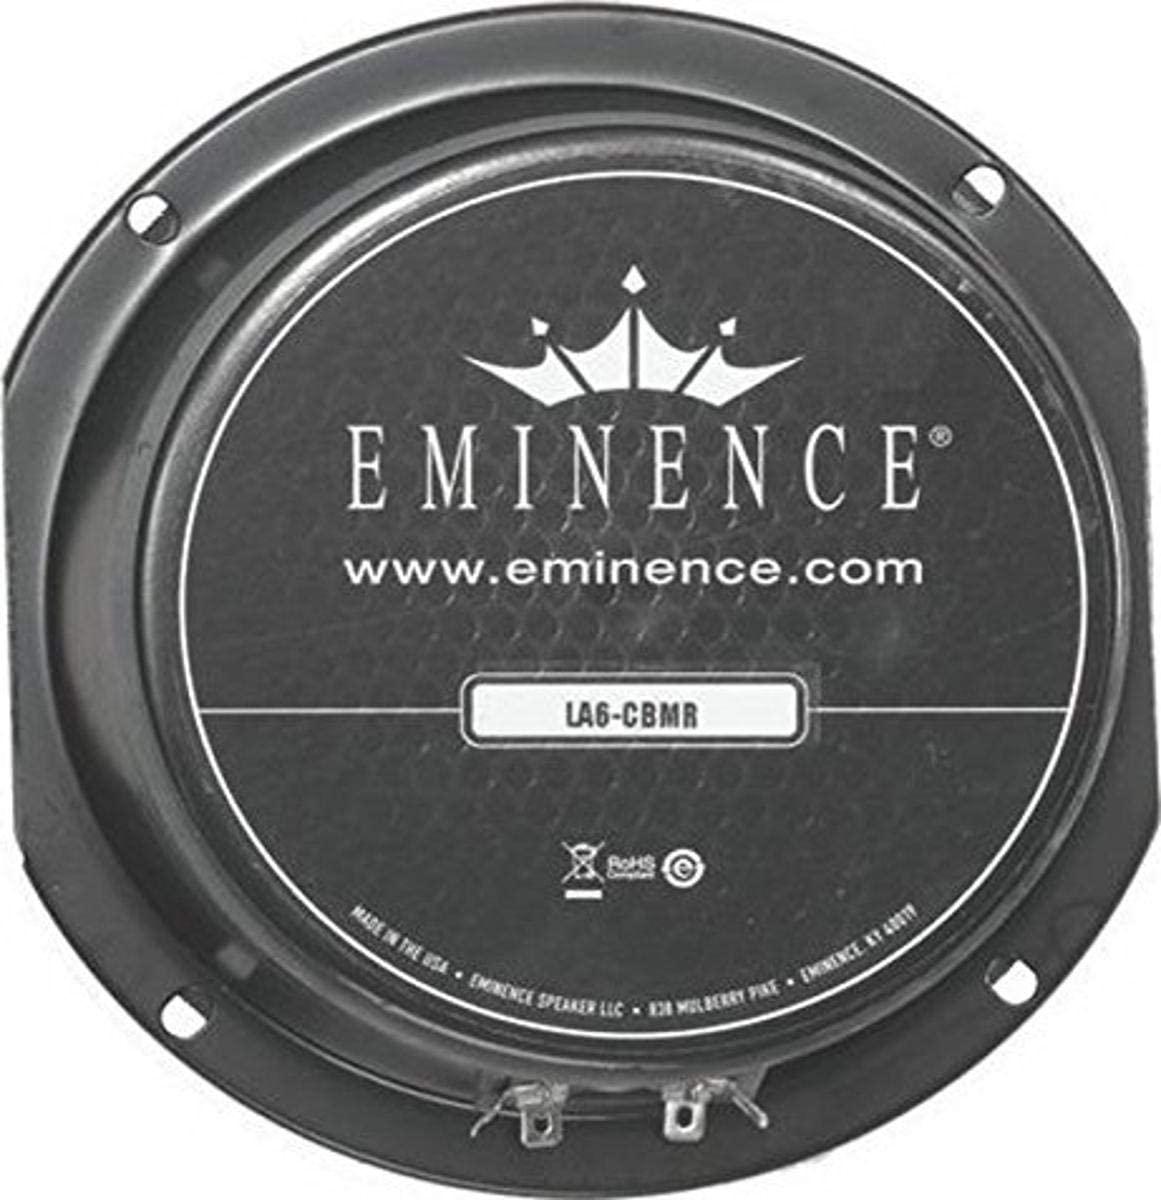 EMINENCE, Eminence American Standard LA6-CBMR 6 Midrange Pro Audio Speaker, 150 Watts at 8 Ohms